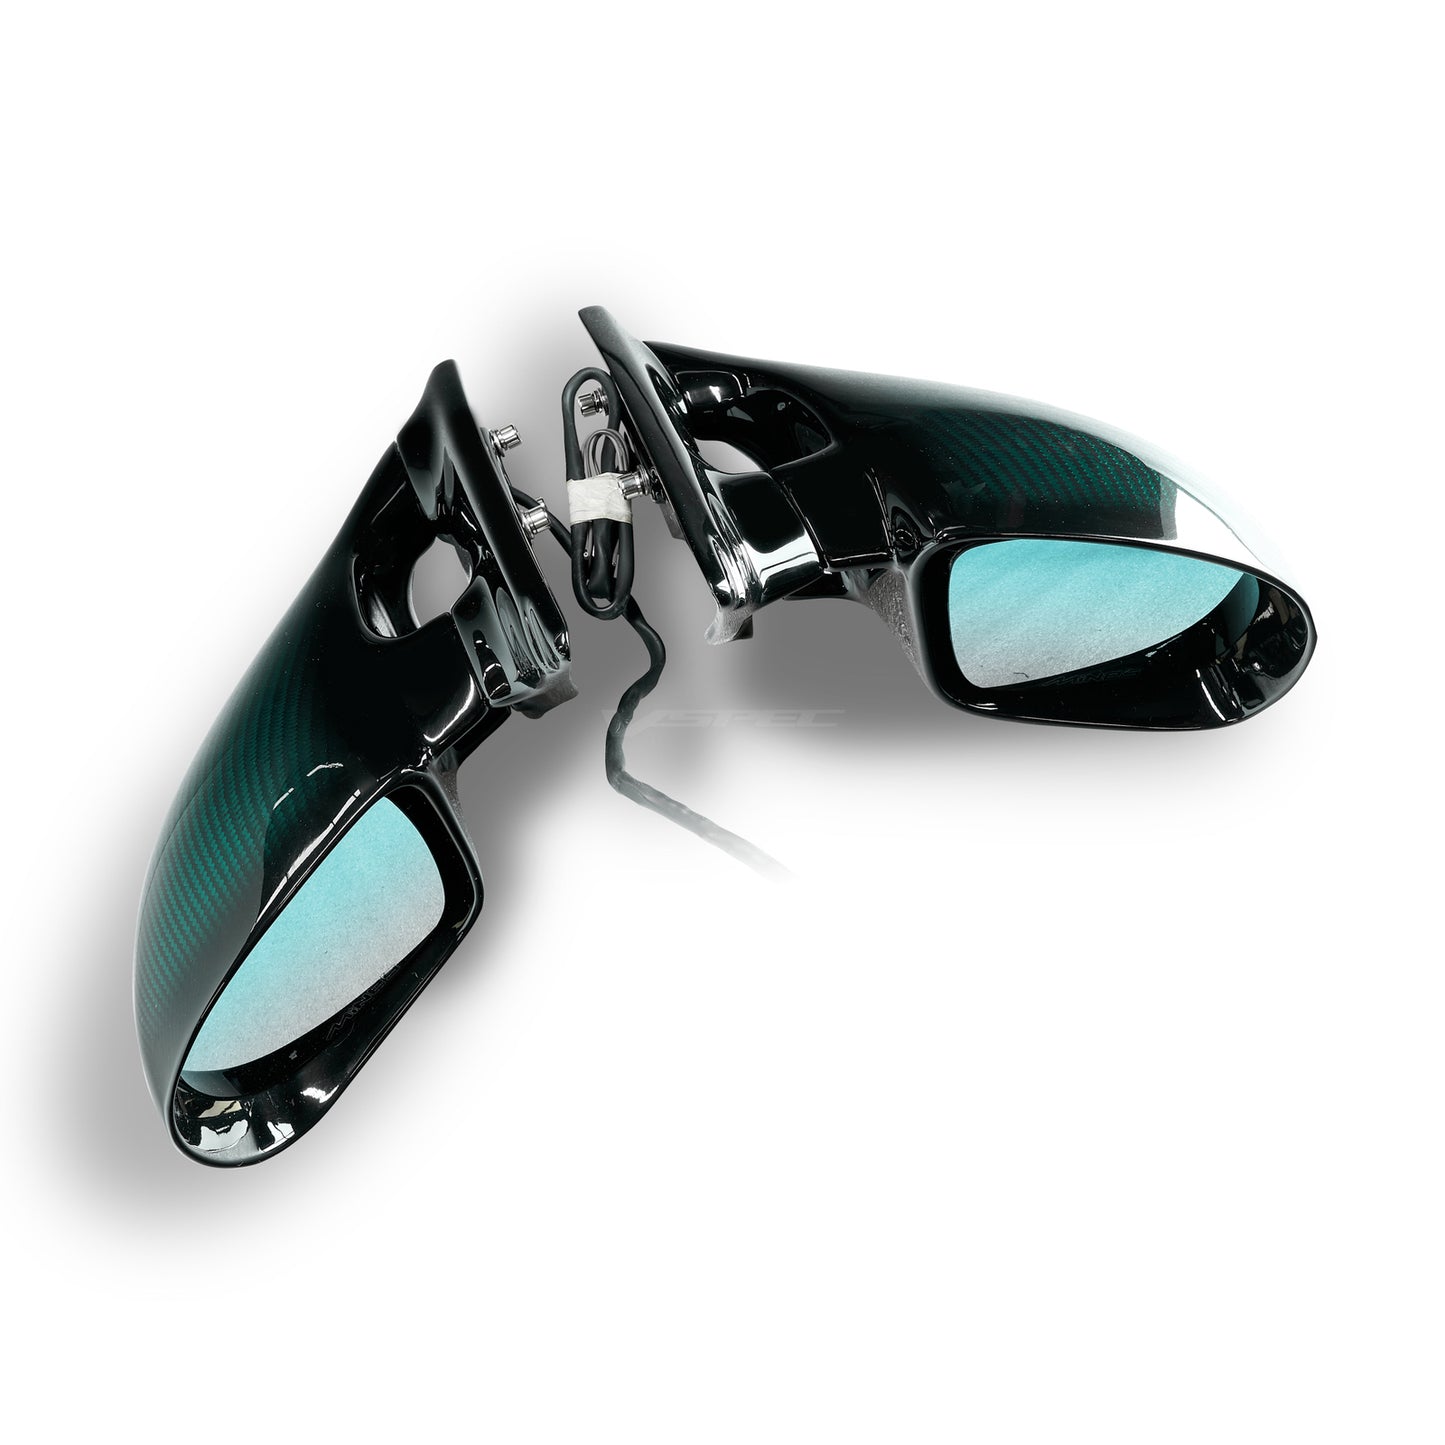 MINE'S Carbon Aero Mirrors for Skyline R34 BNR34 GT-R (Emerald)